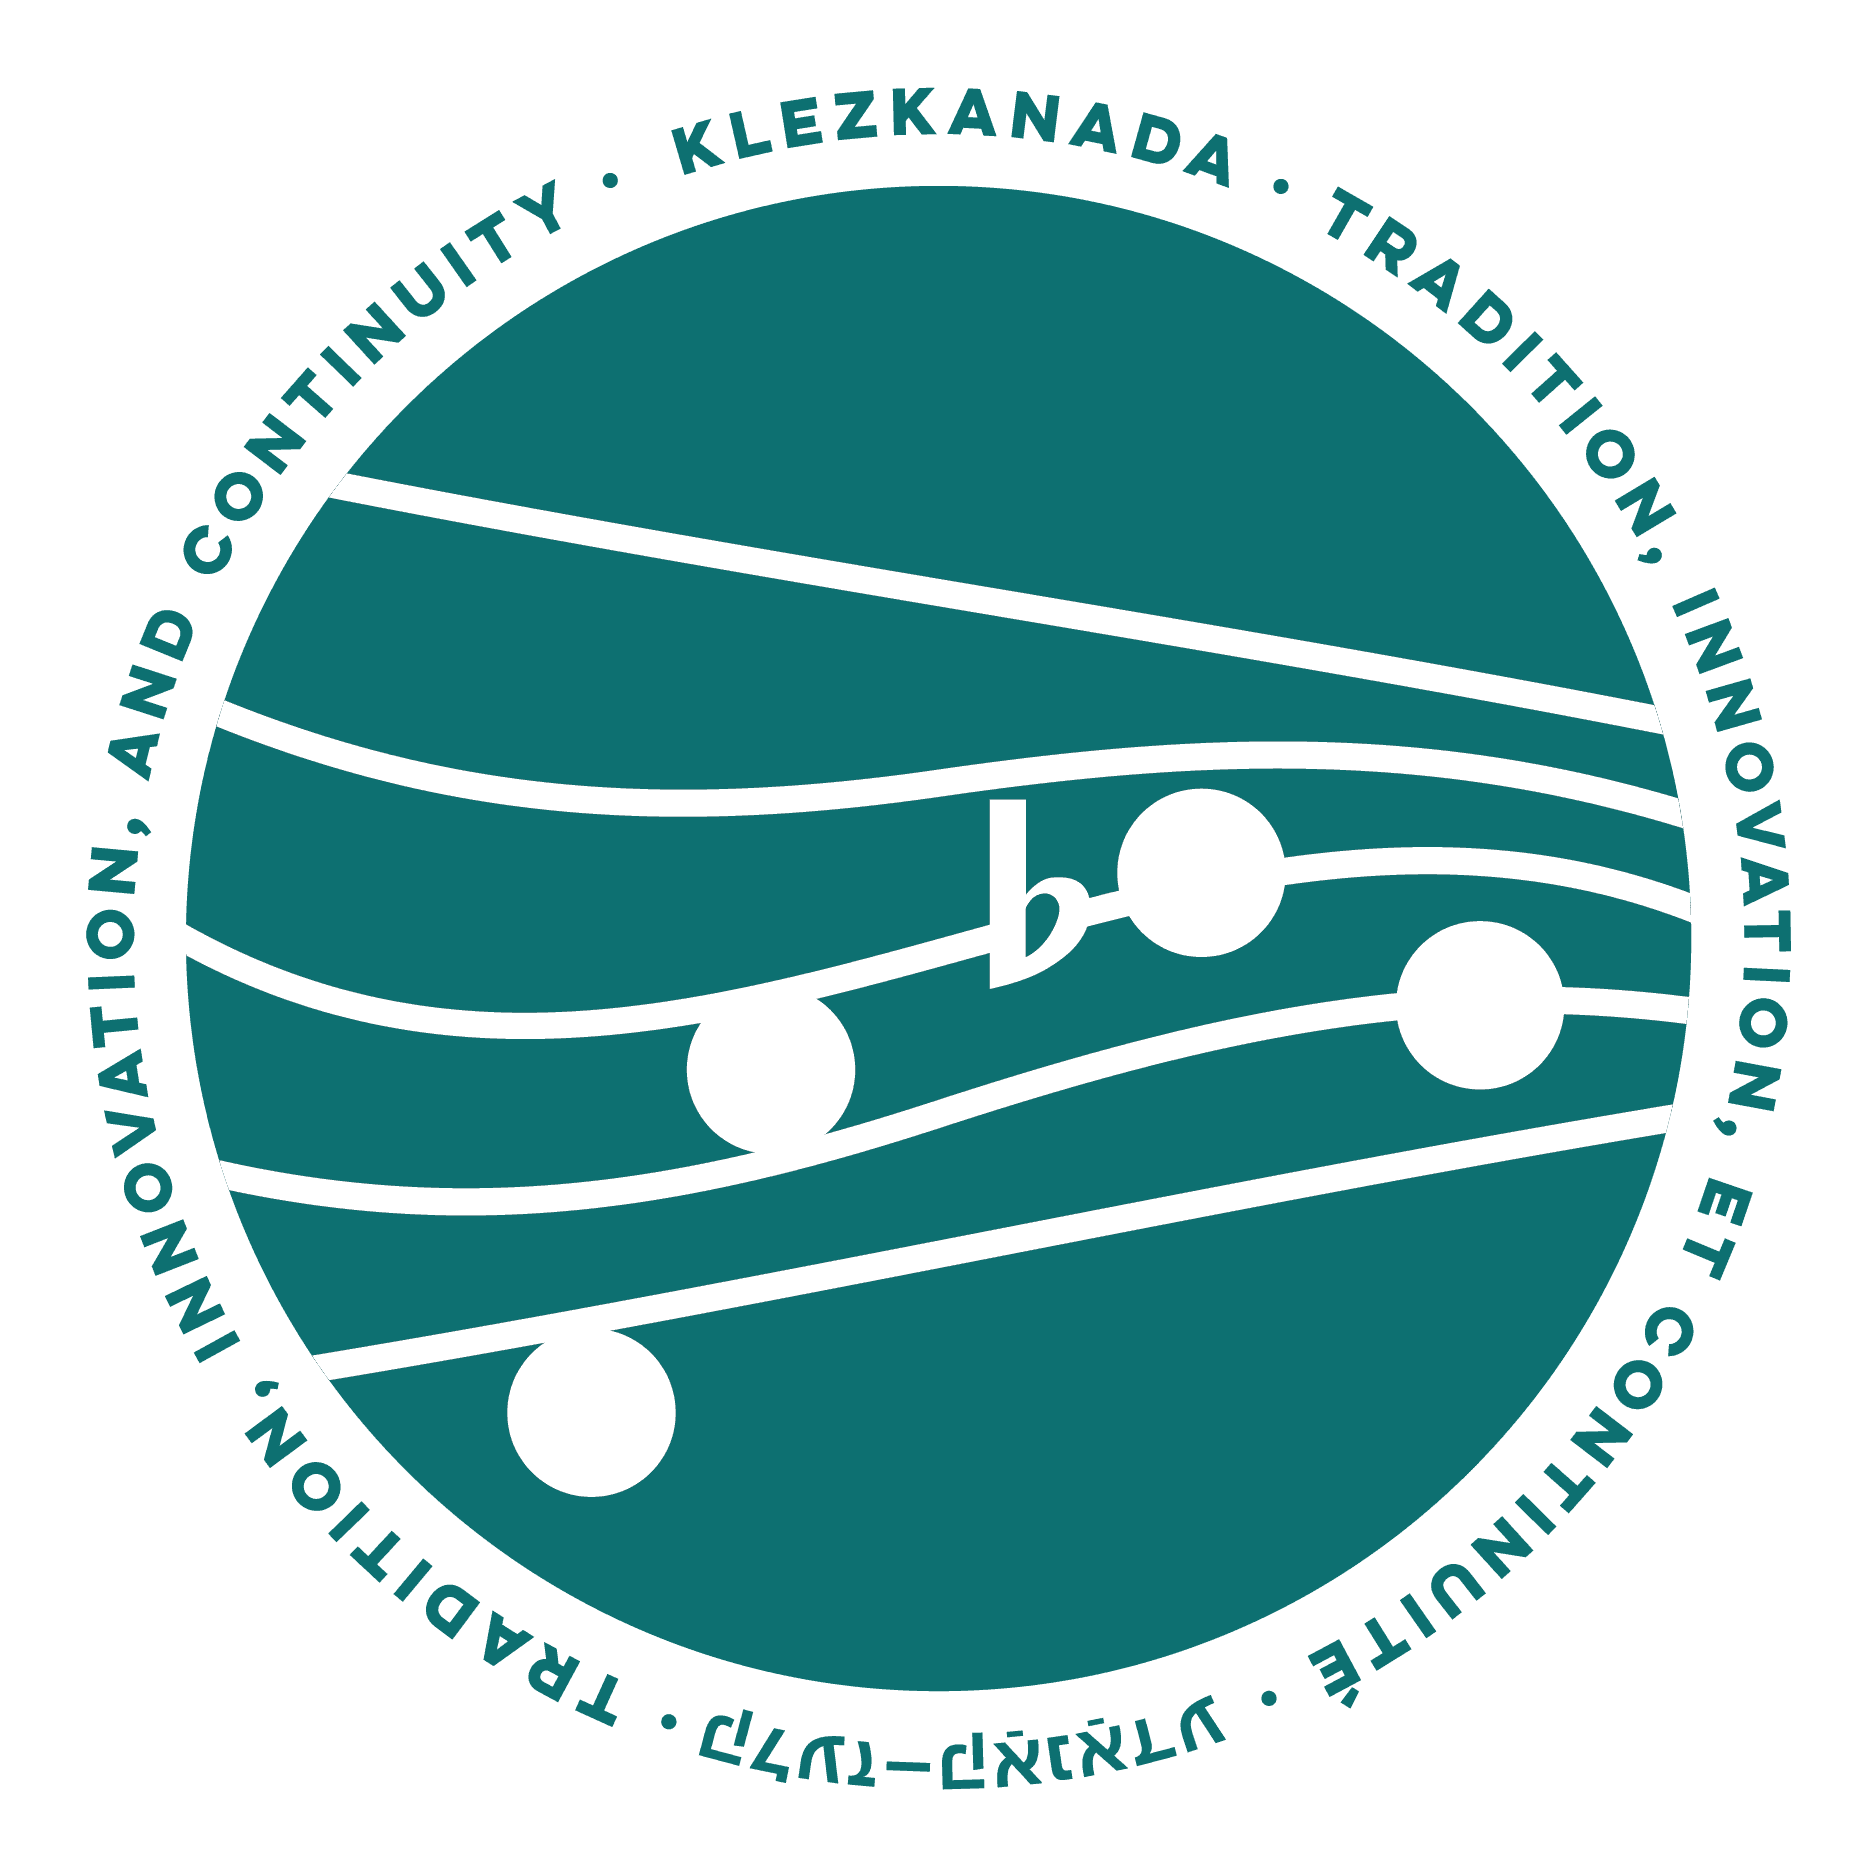 klezkanada-logo-2021-teal-circletext-clear-20220328-150924.png